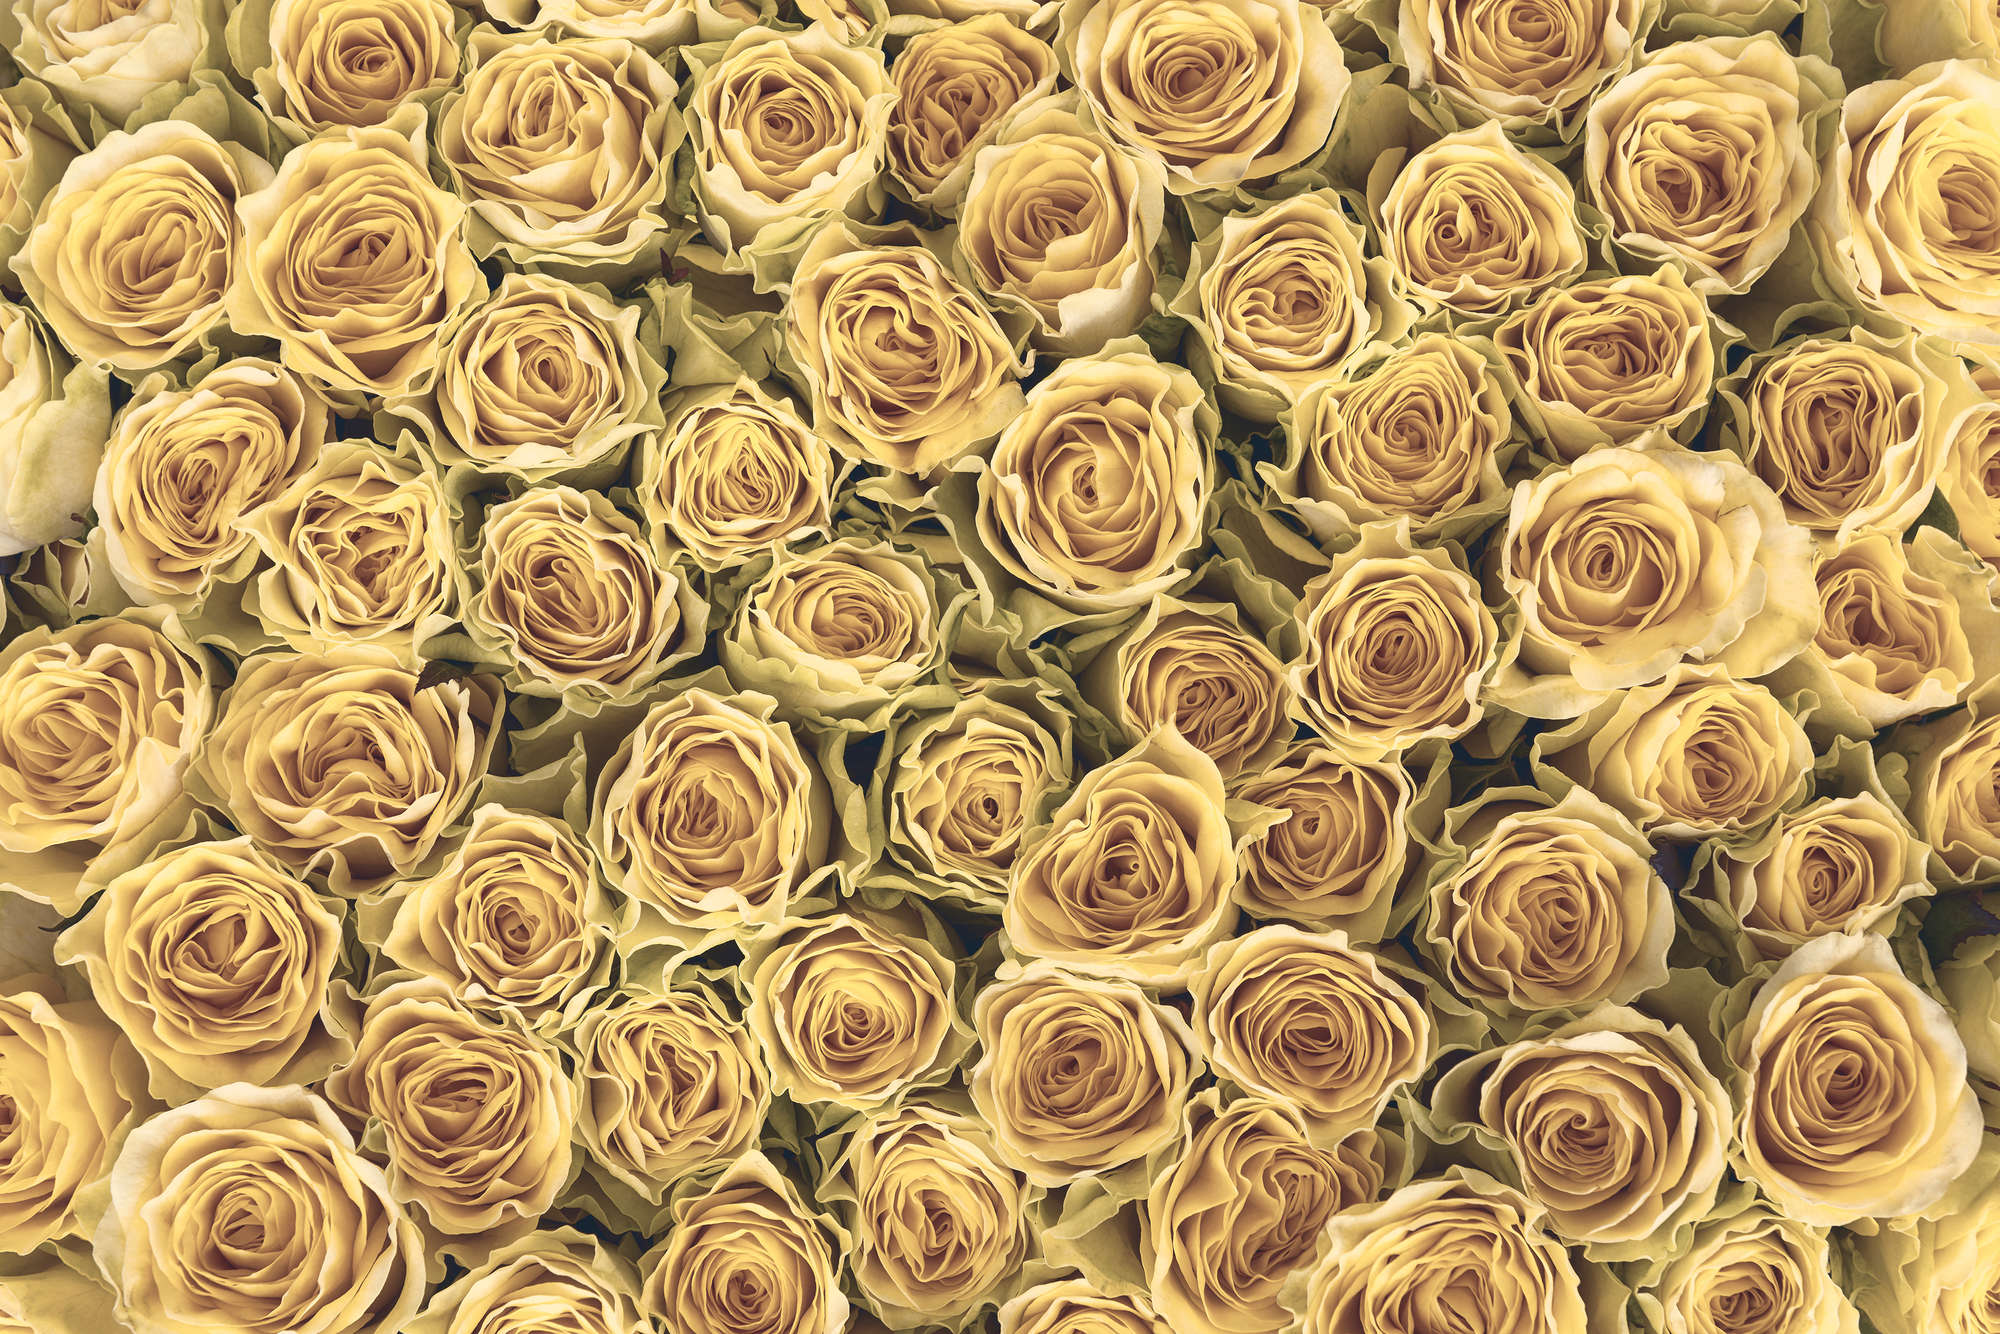             Papel pintado de plantas Rosas doradas sobre vellón liso de primera calidad
        